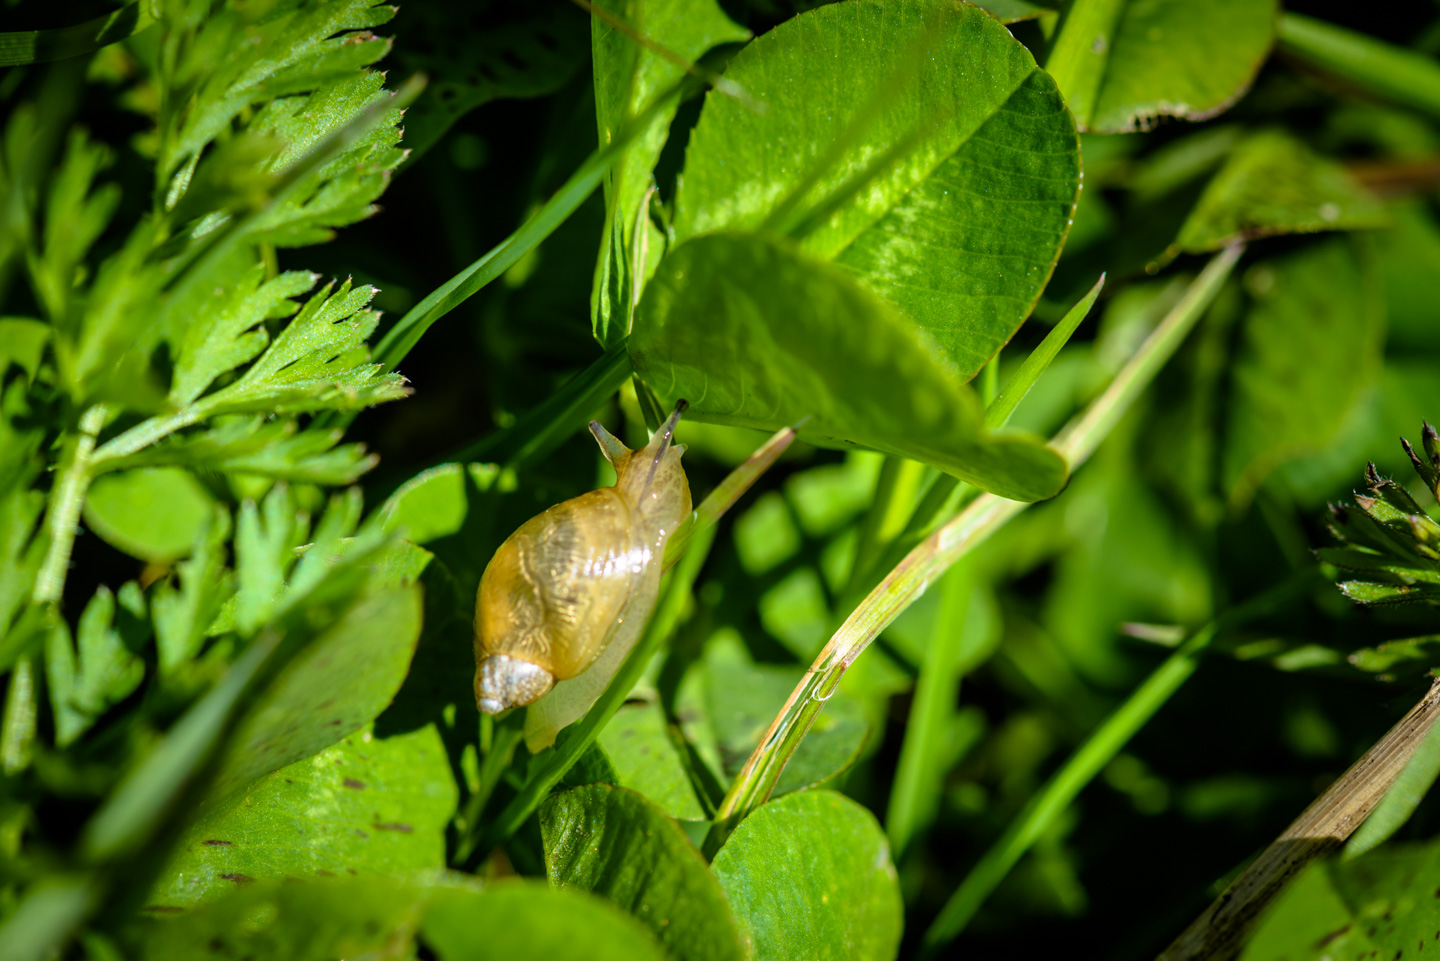 A slug on grass.